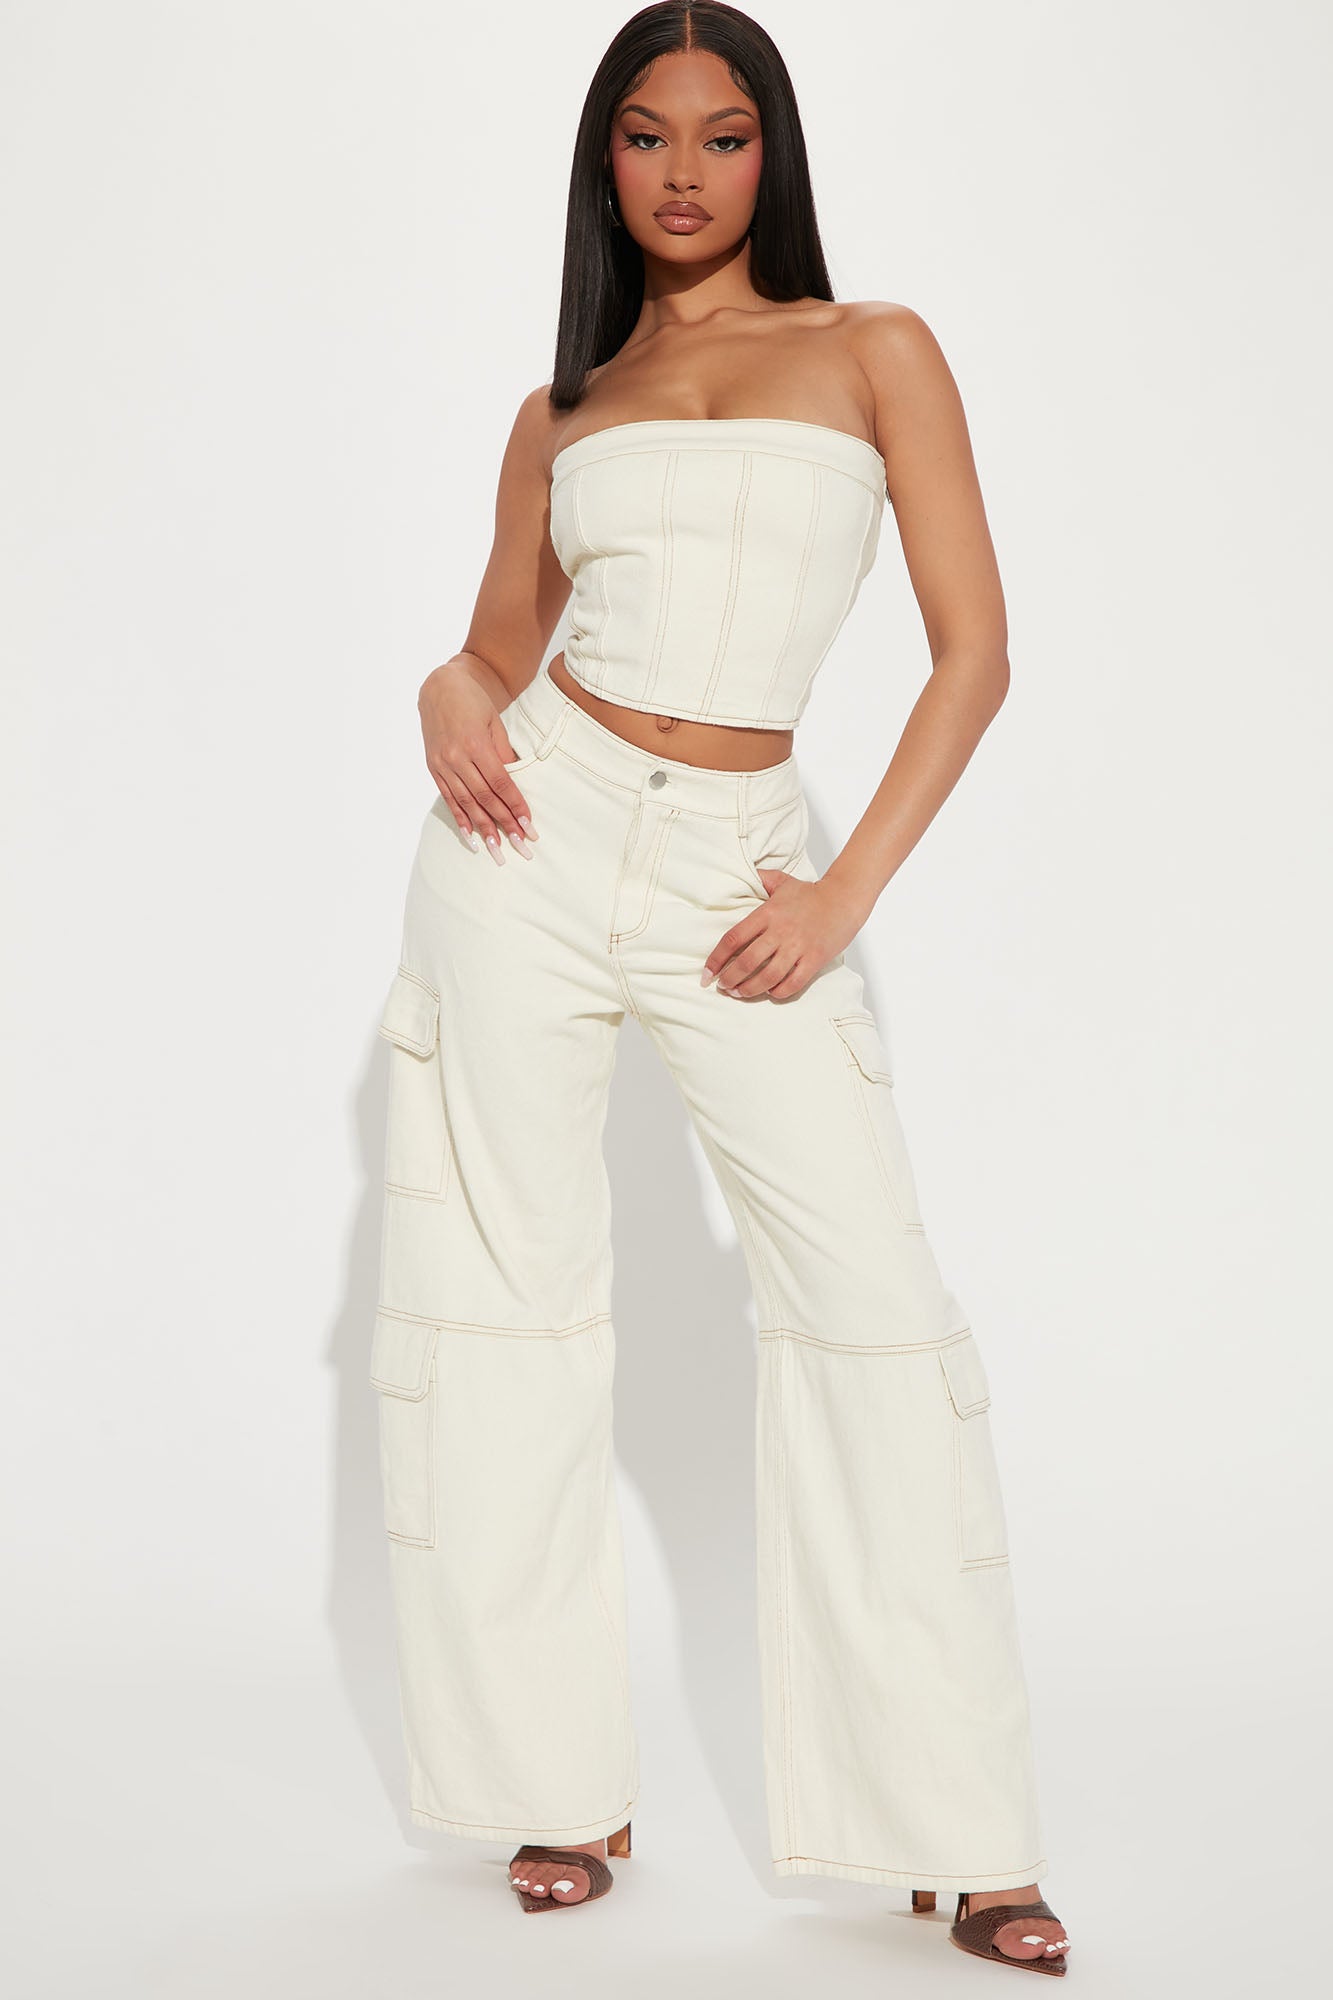 The Best Yet Pant Set - Cream  Fashion Nova, Matching Sets